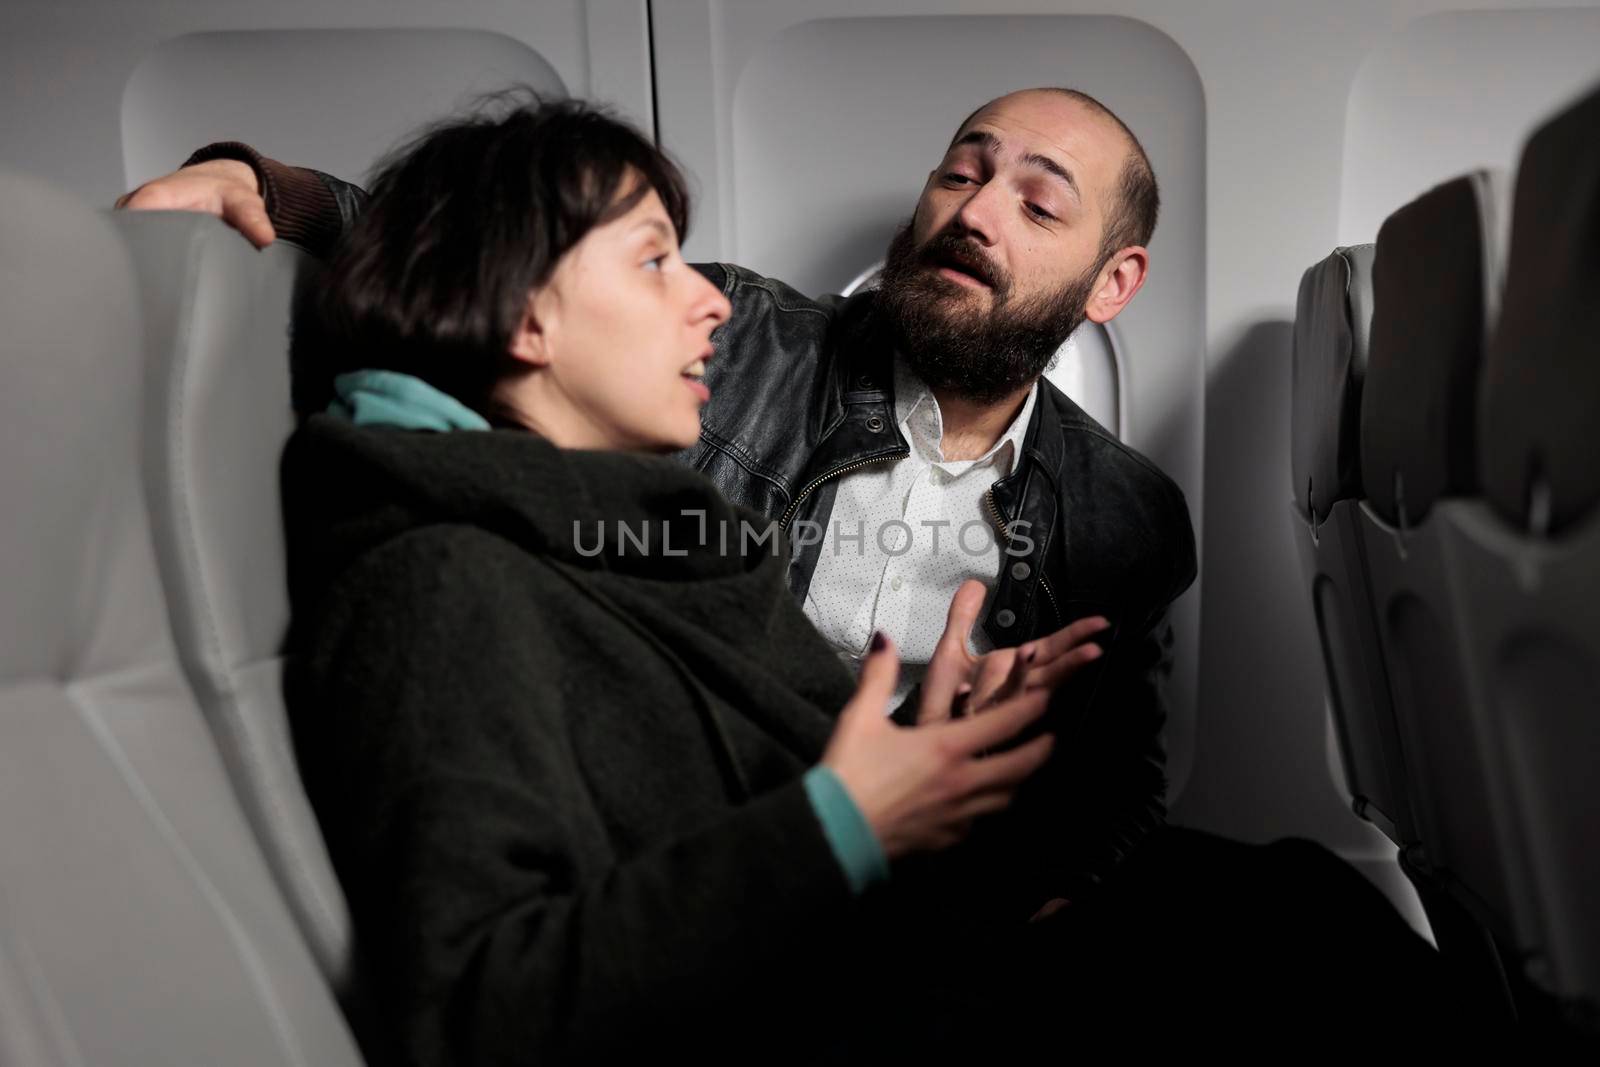 Jet passengers having conversation on commercial flight by DCStudio